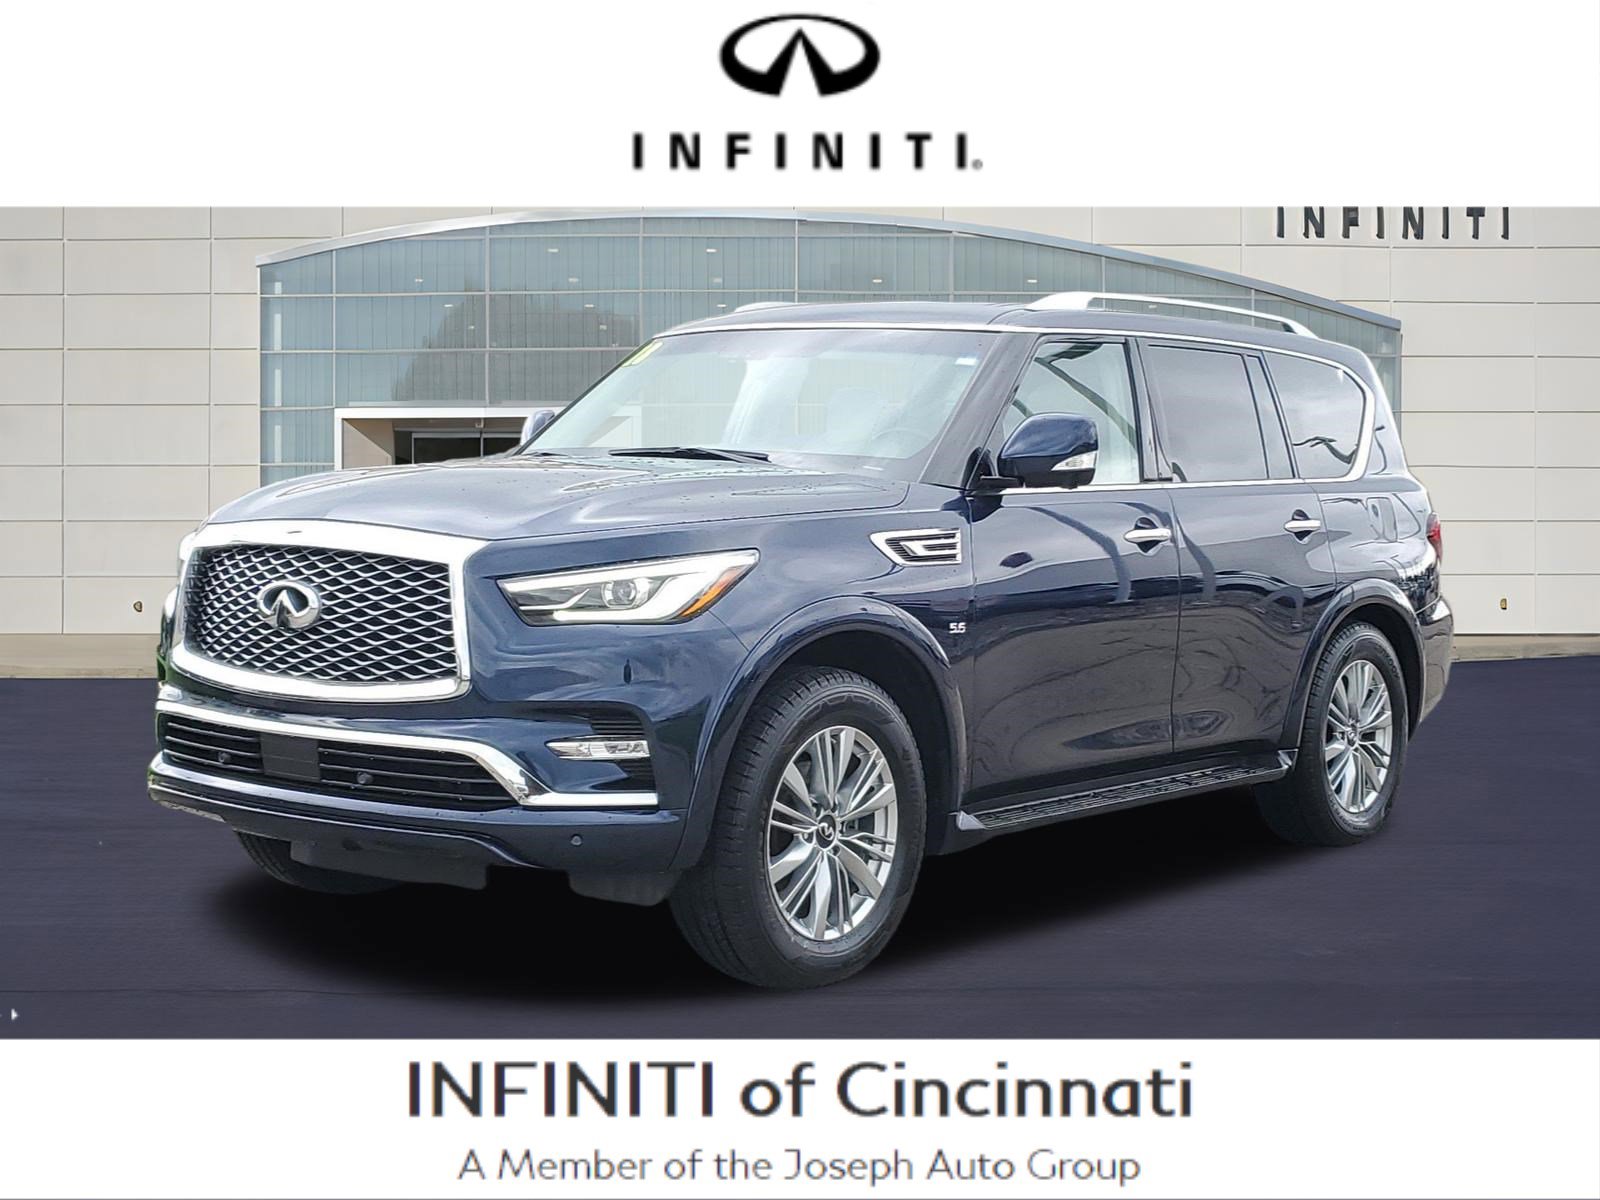 2018 Infiniti QX80 Cincinnati OH